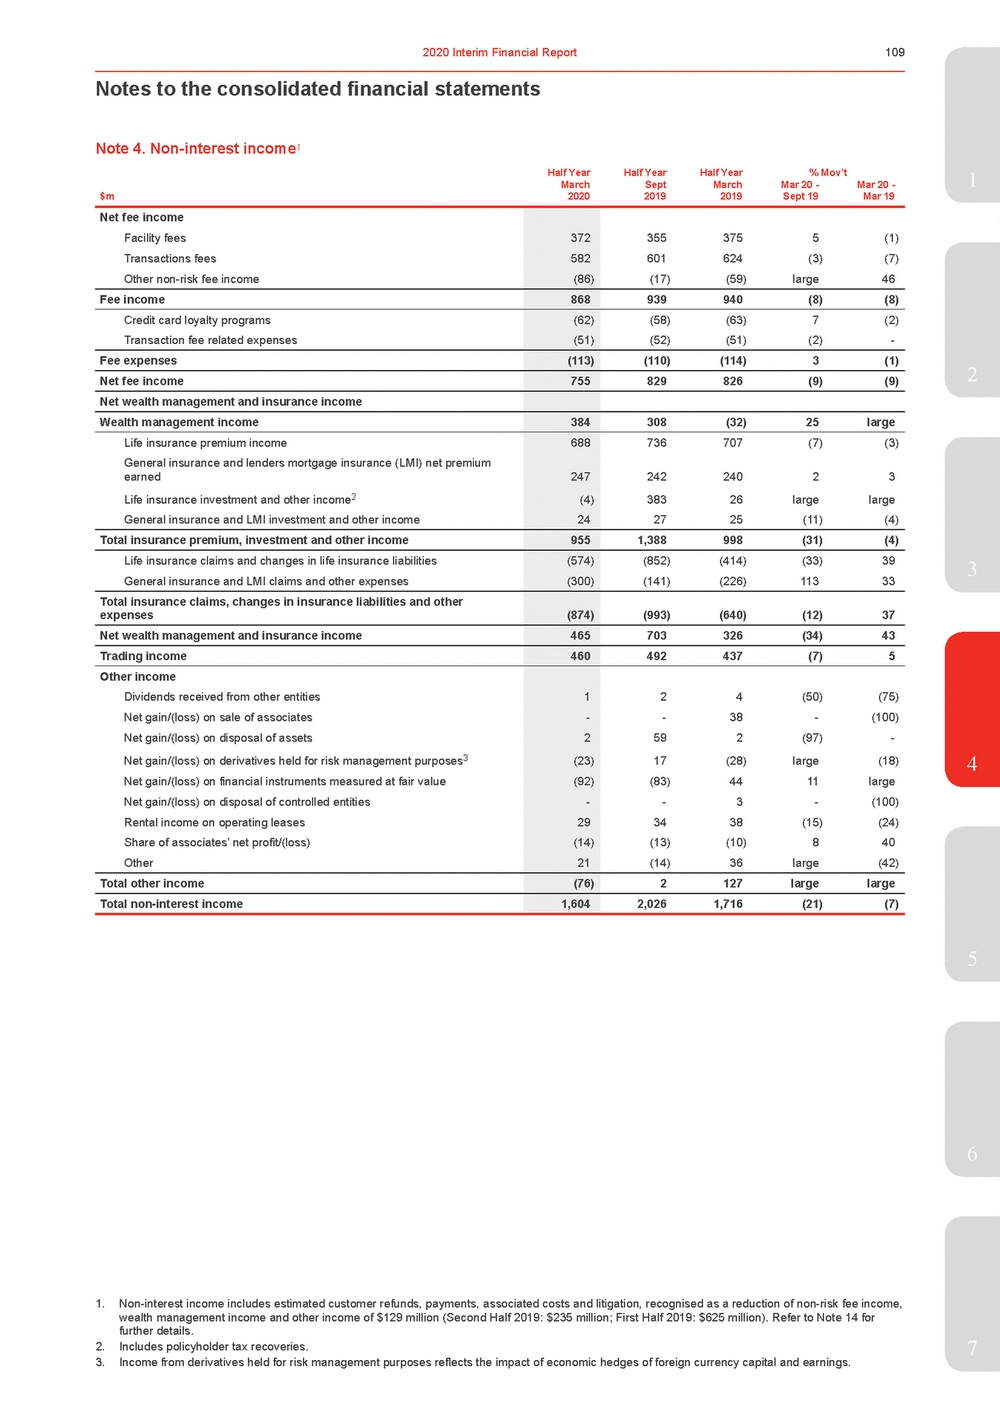 11676-3-ex1_westpac 2020 interim financial results announcement_page_114.jpg